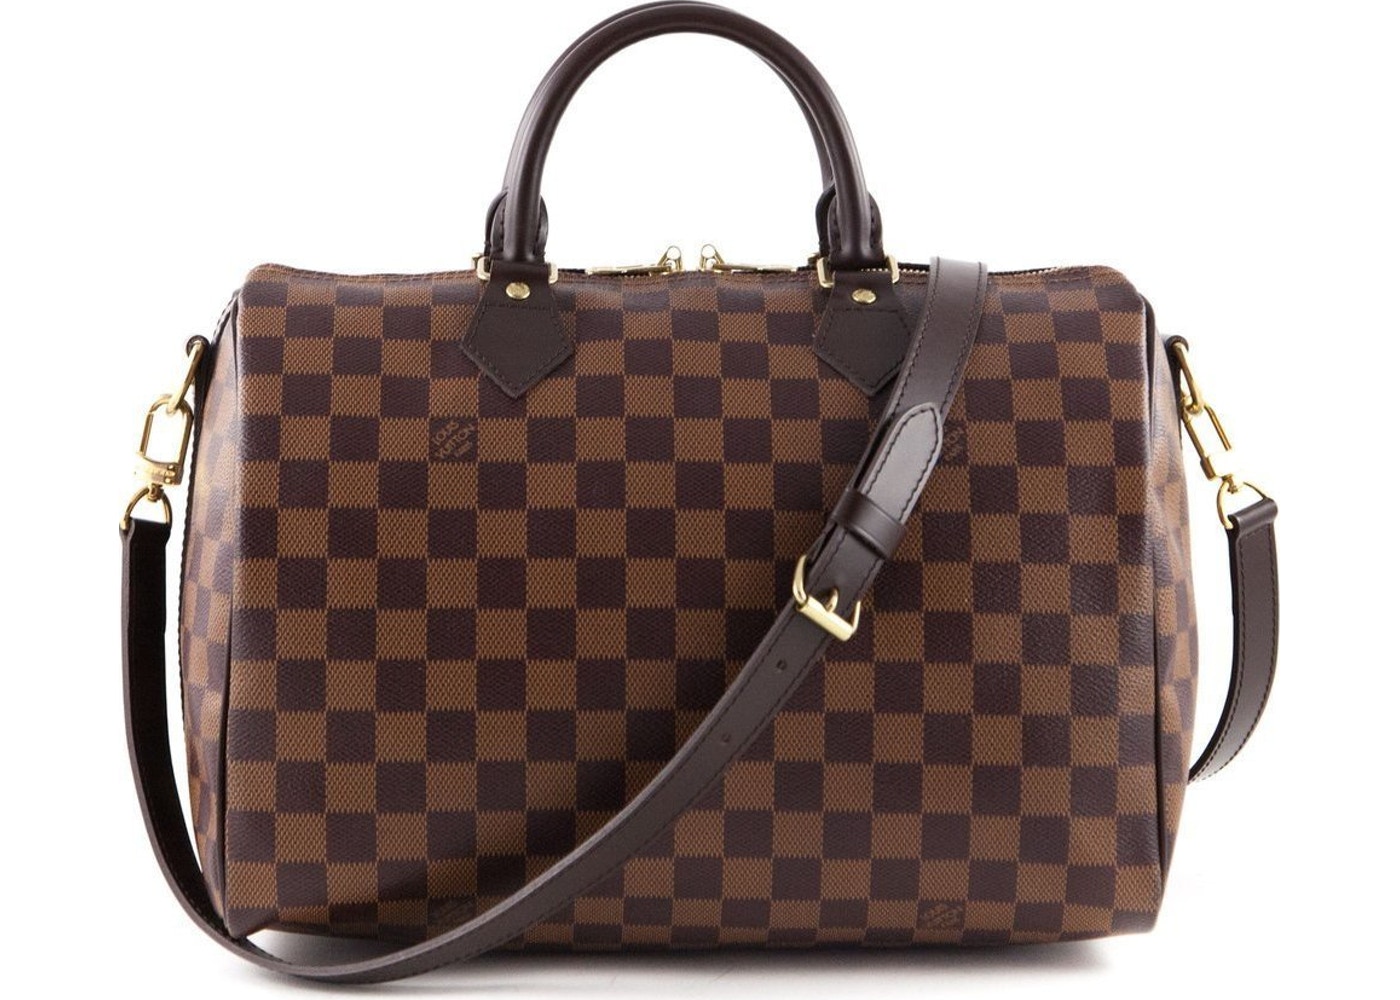 Louis Vuitton Speedy Bag Guide